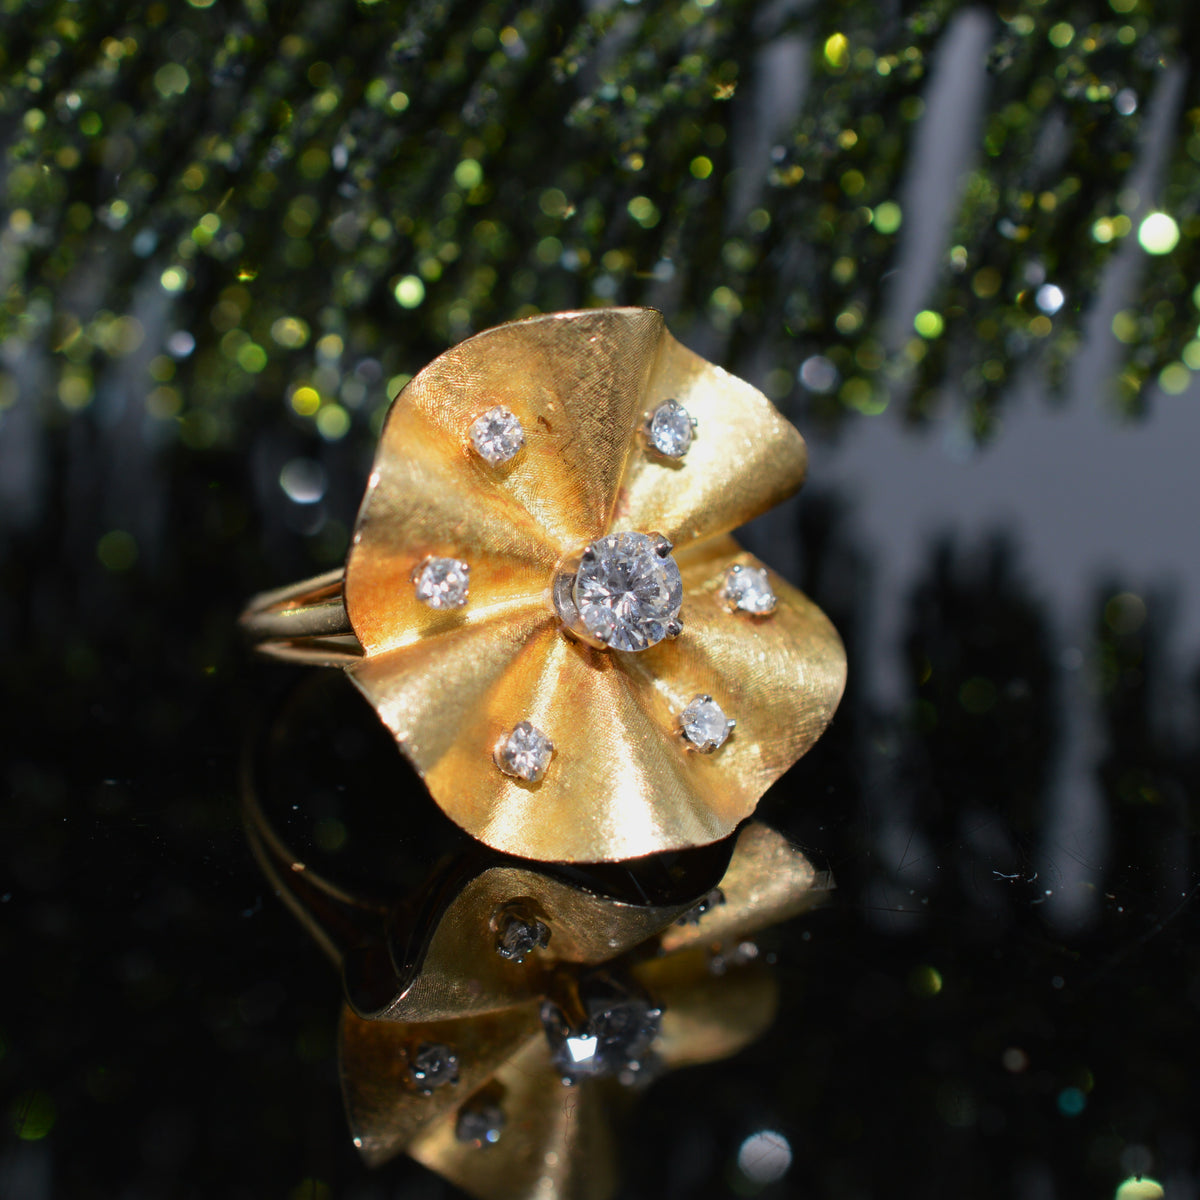 18K Yellow Gold Diamond Fashion Ring